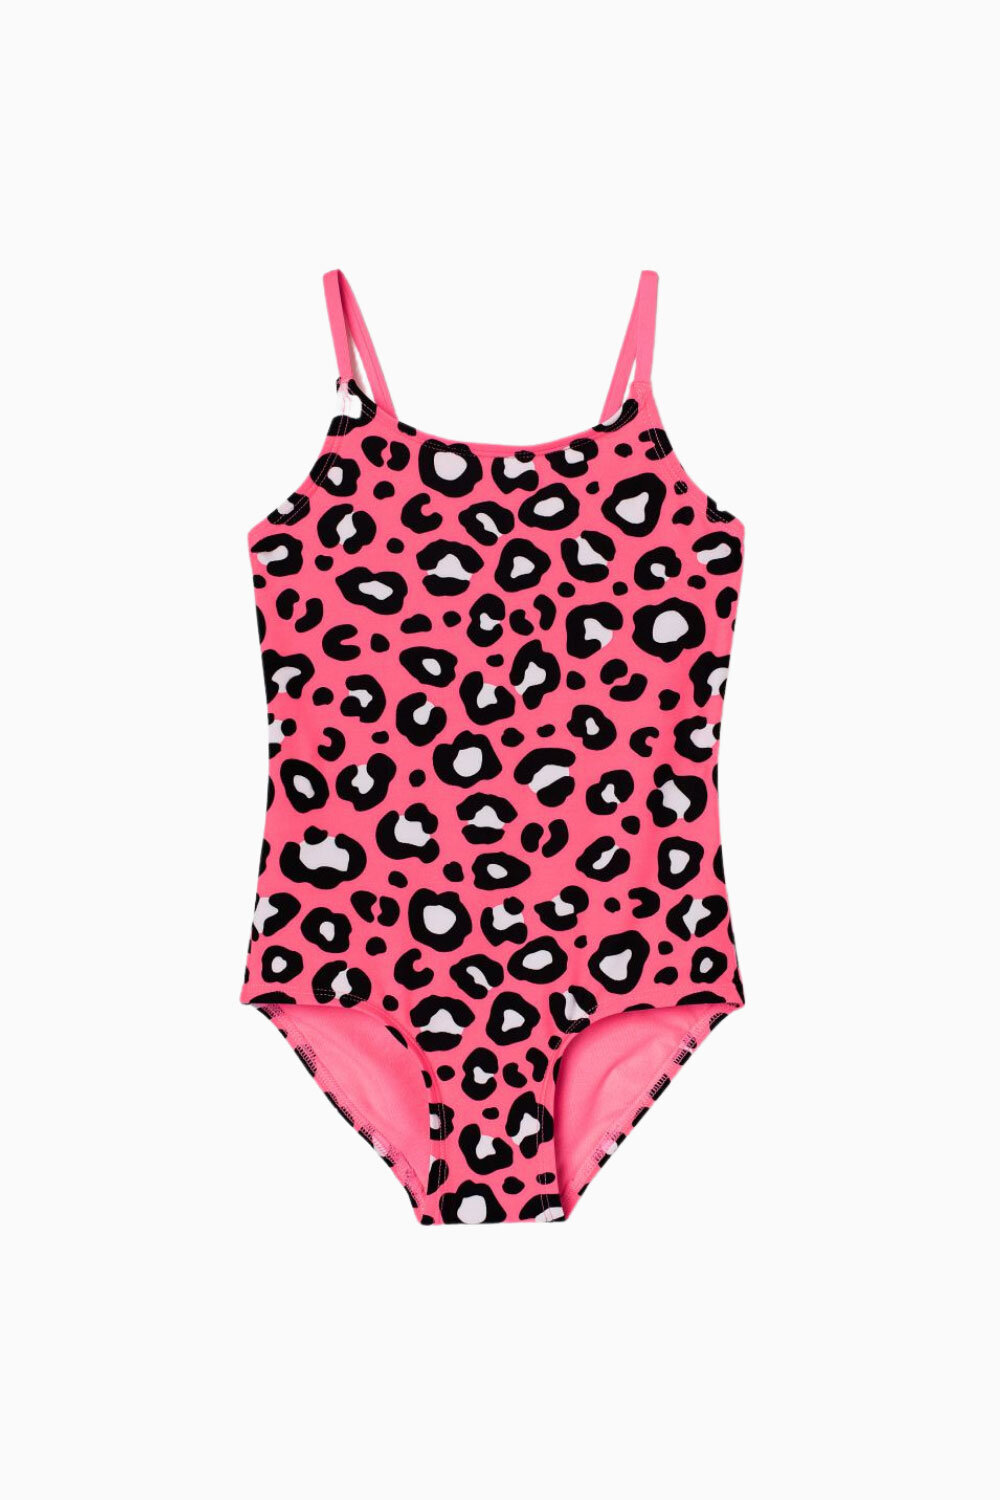 Toddler Girl Swimwear: 2021 — Ana Jacqueline - Latina Mom. Motherhood ...